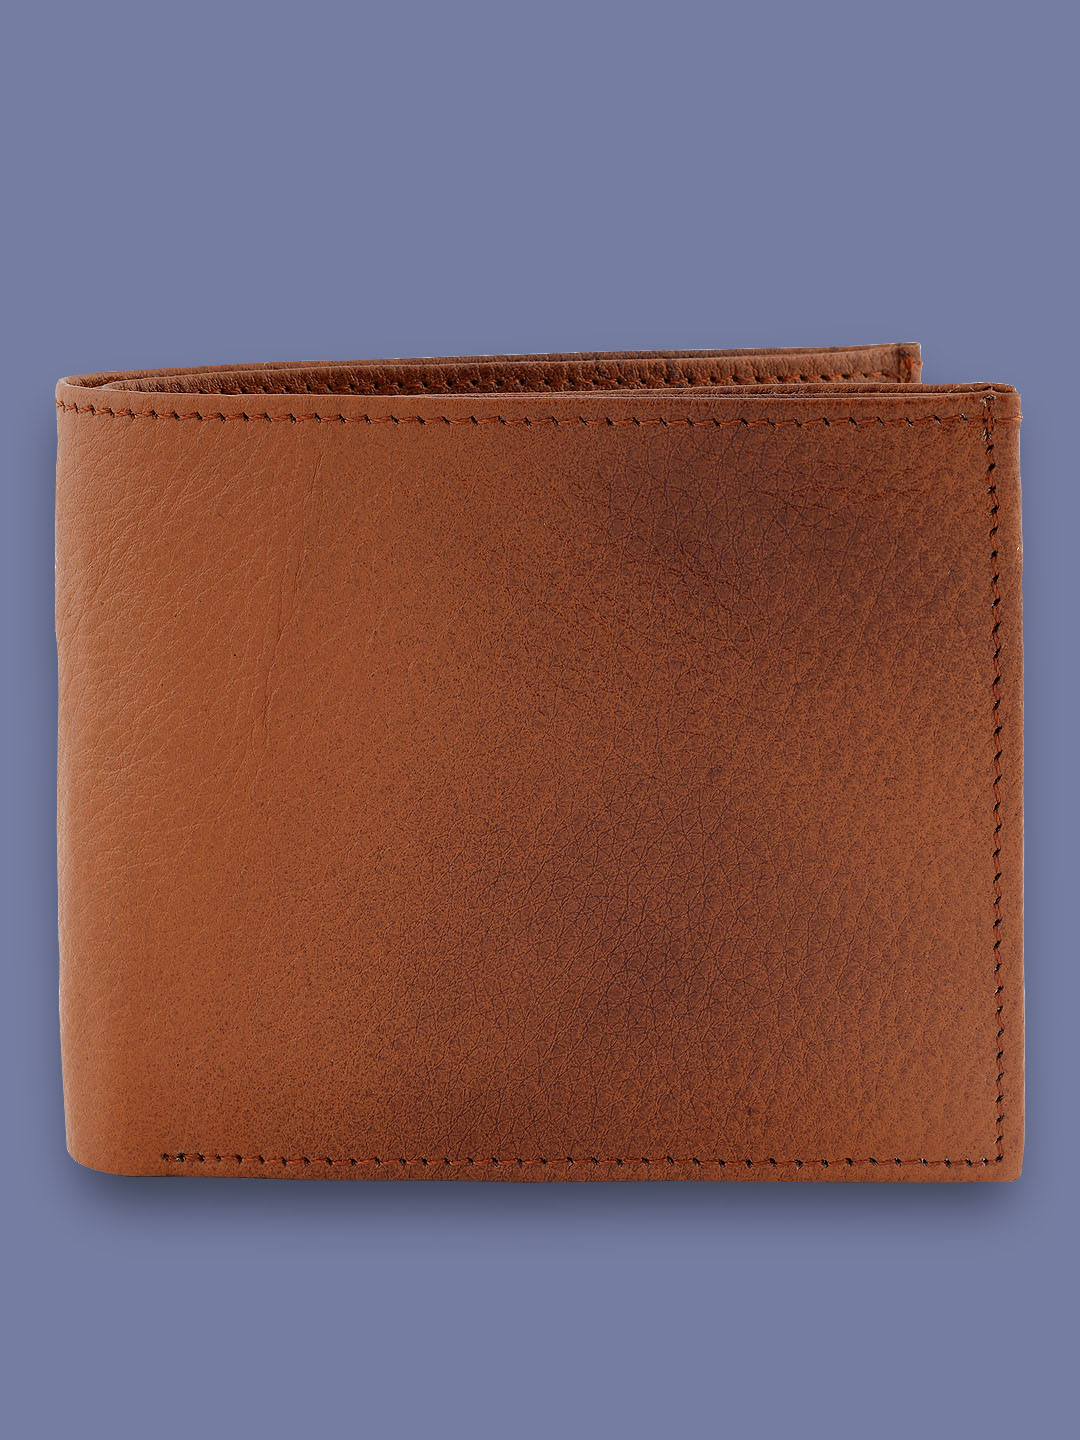 Men's Wallet | Wallet, Leather wallet mens, Card wallet